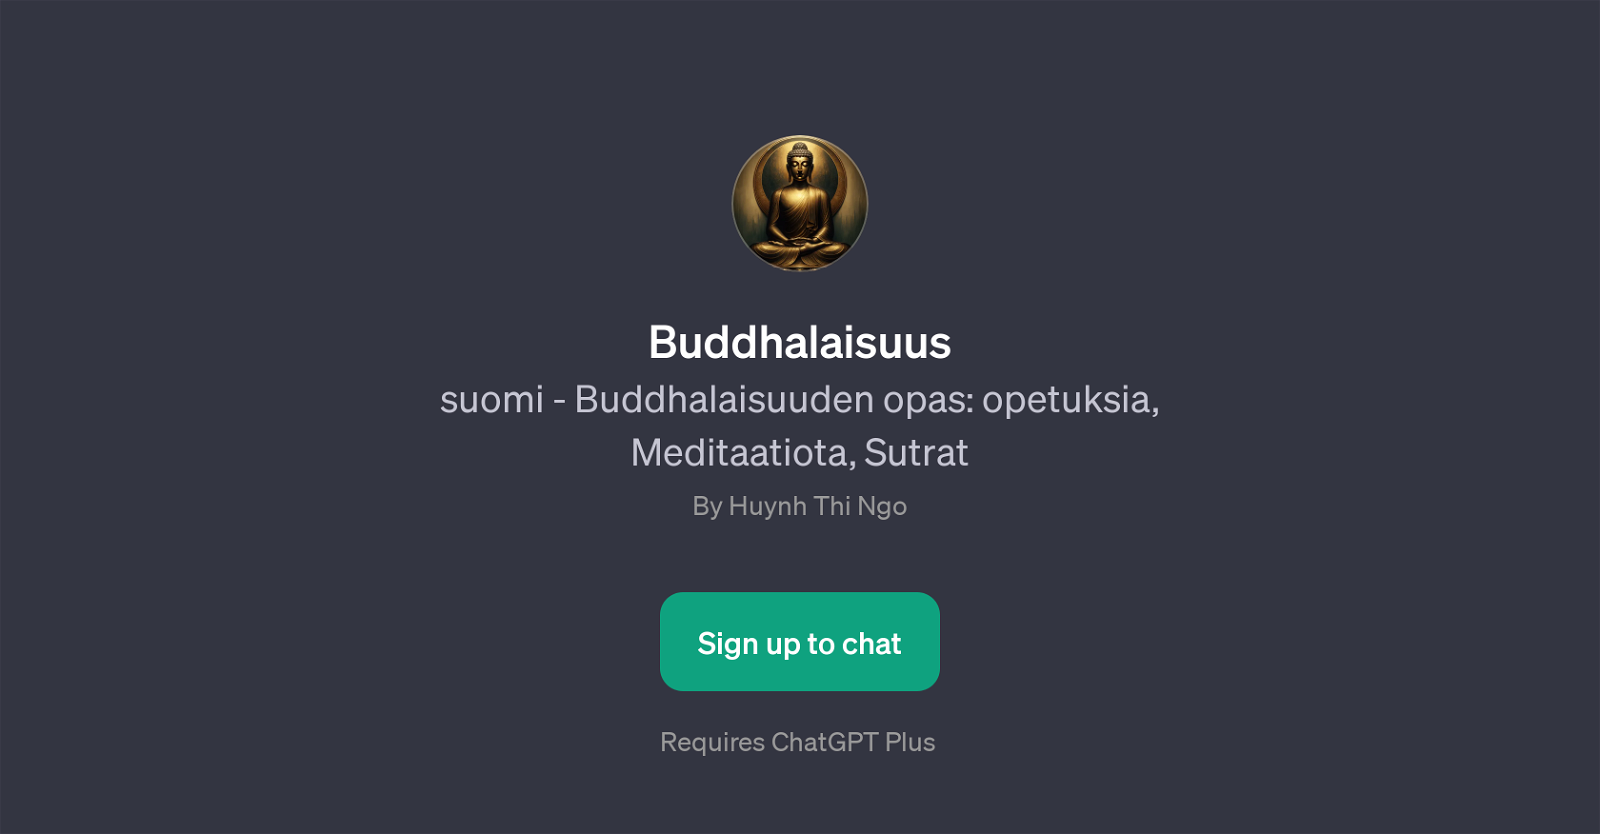 Buddhalaisuus website